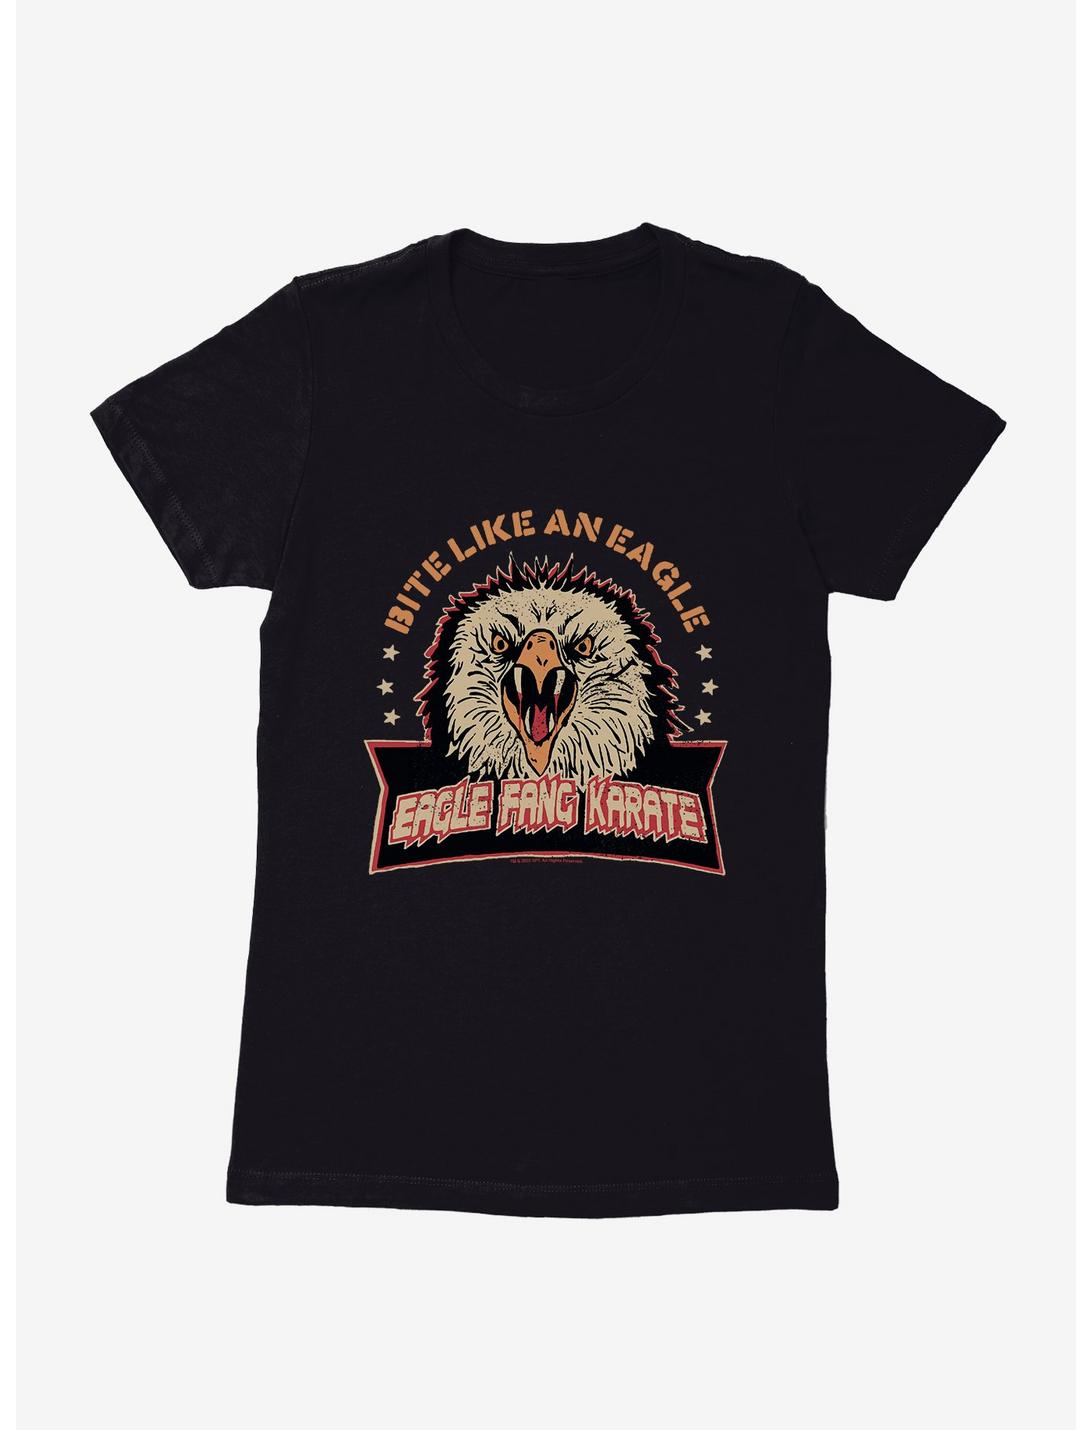 Cobra Kai Eagle Fang Karate Womens T-Shirt, , hi-res